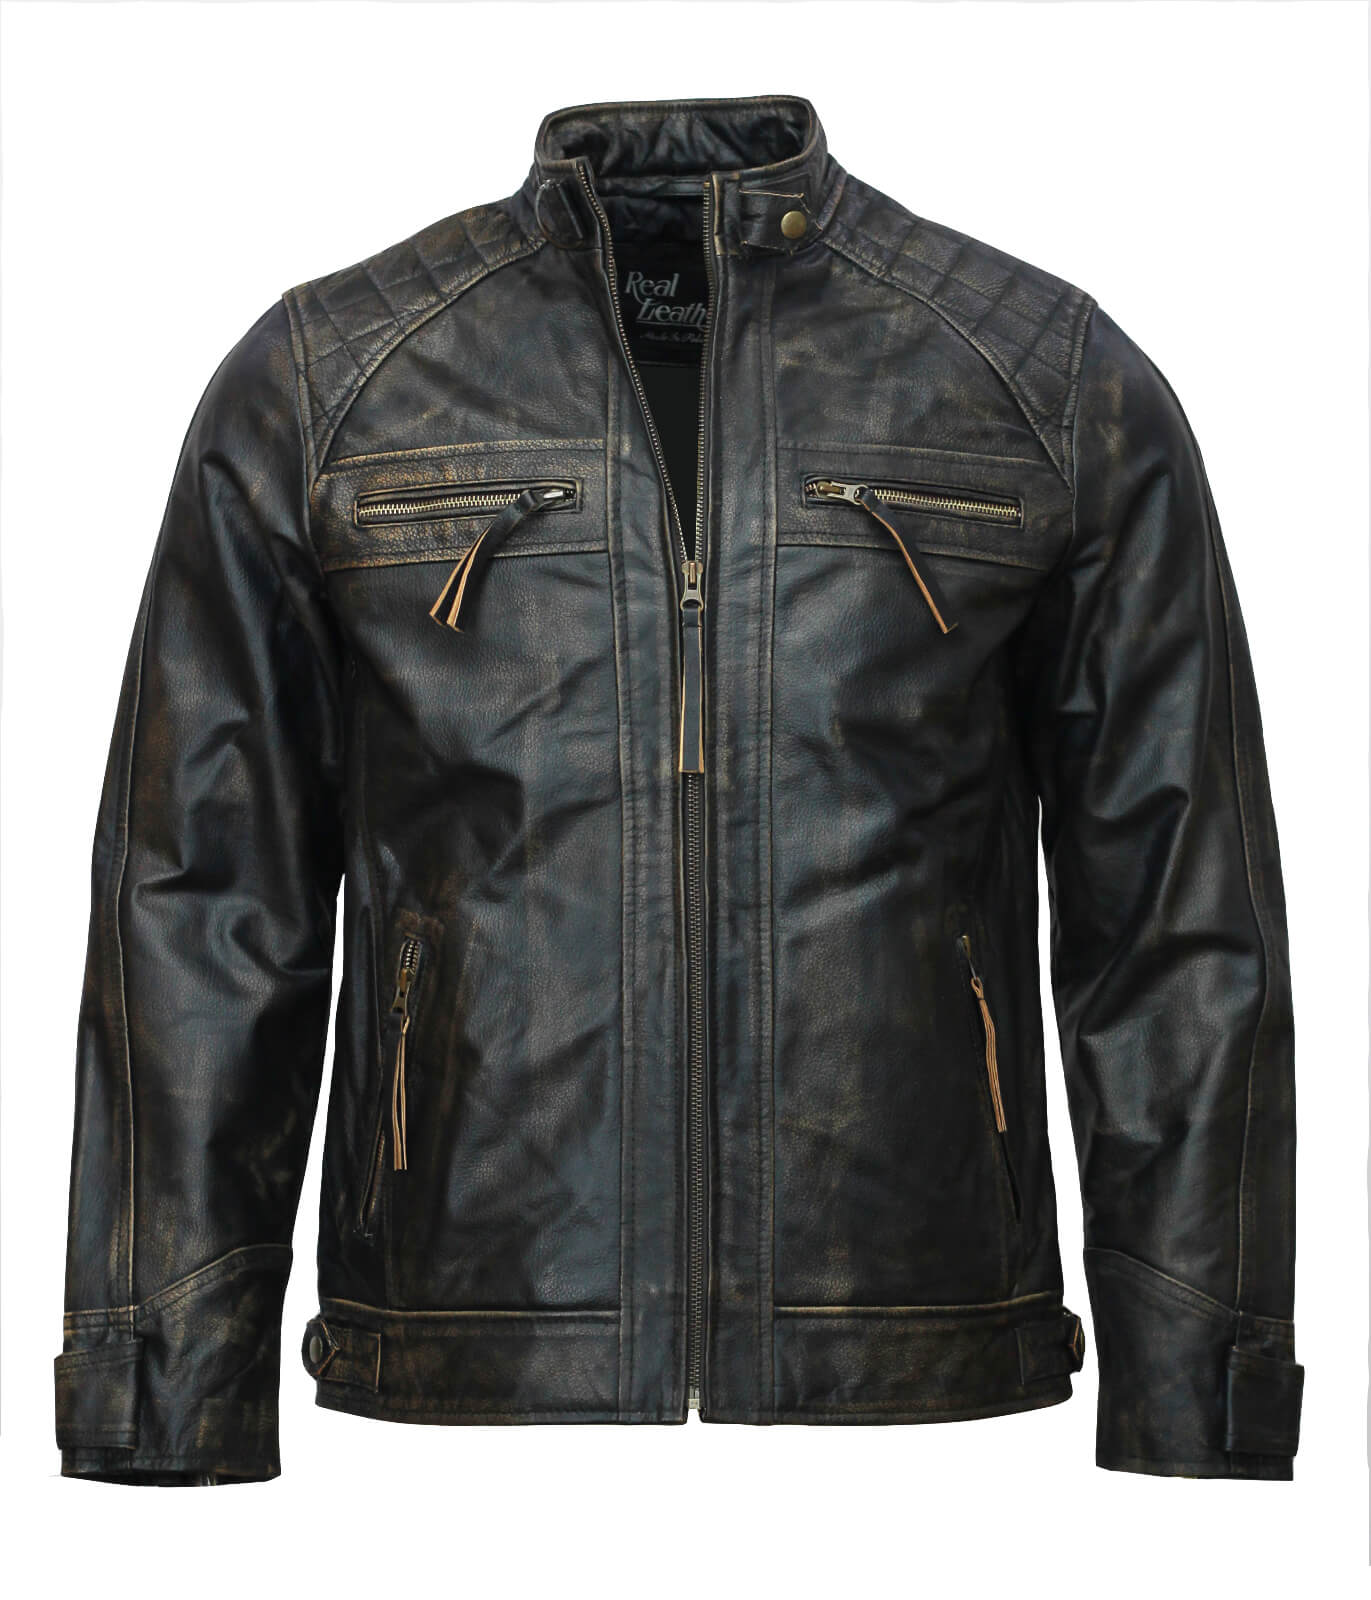 Marlboro Vintage Leather Biker Jacket - Paragon Jackets